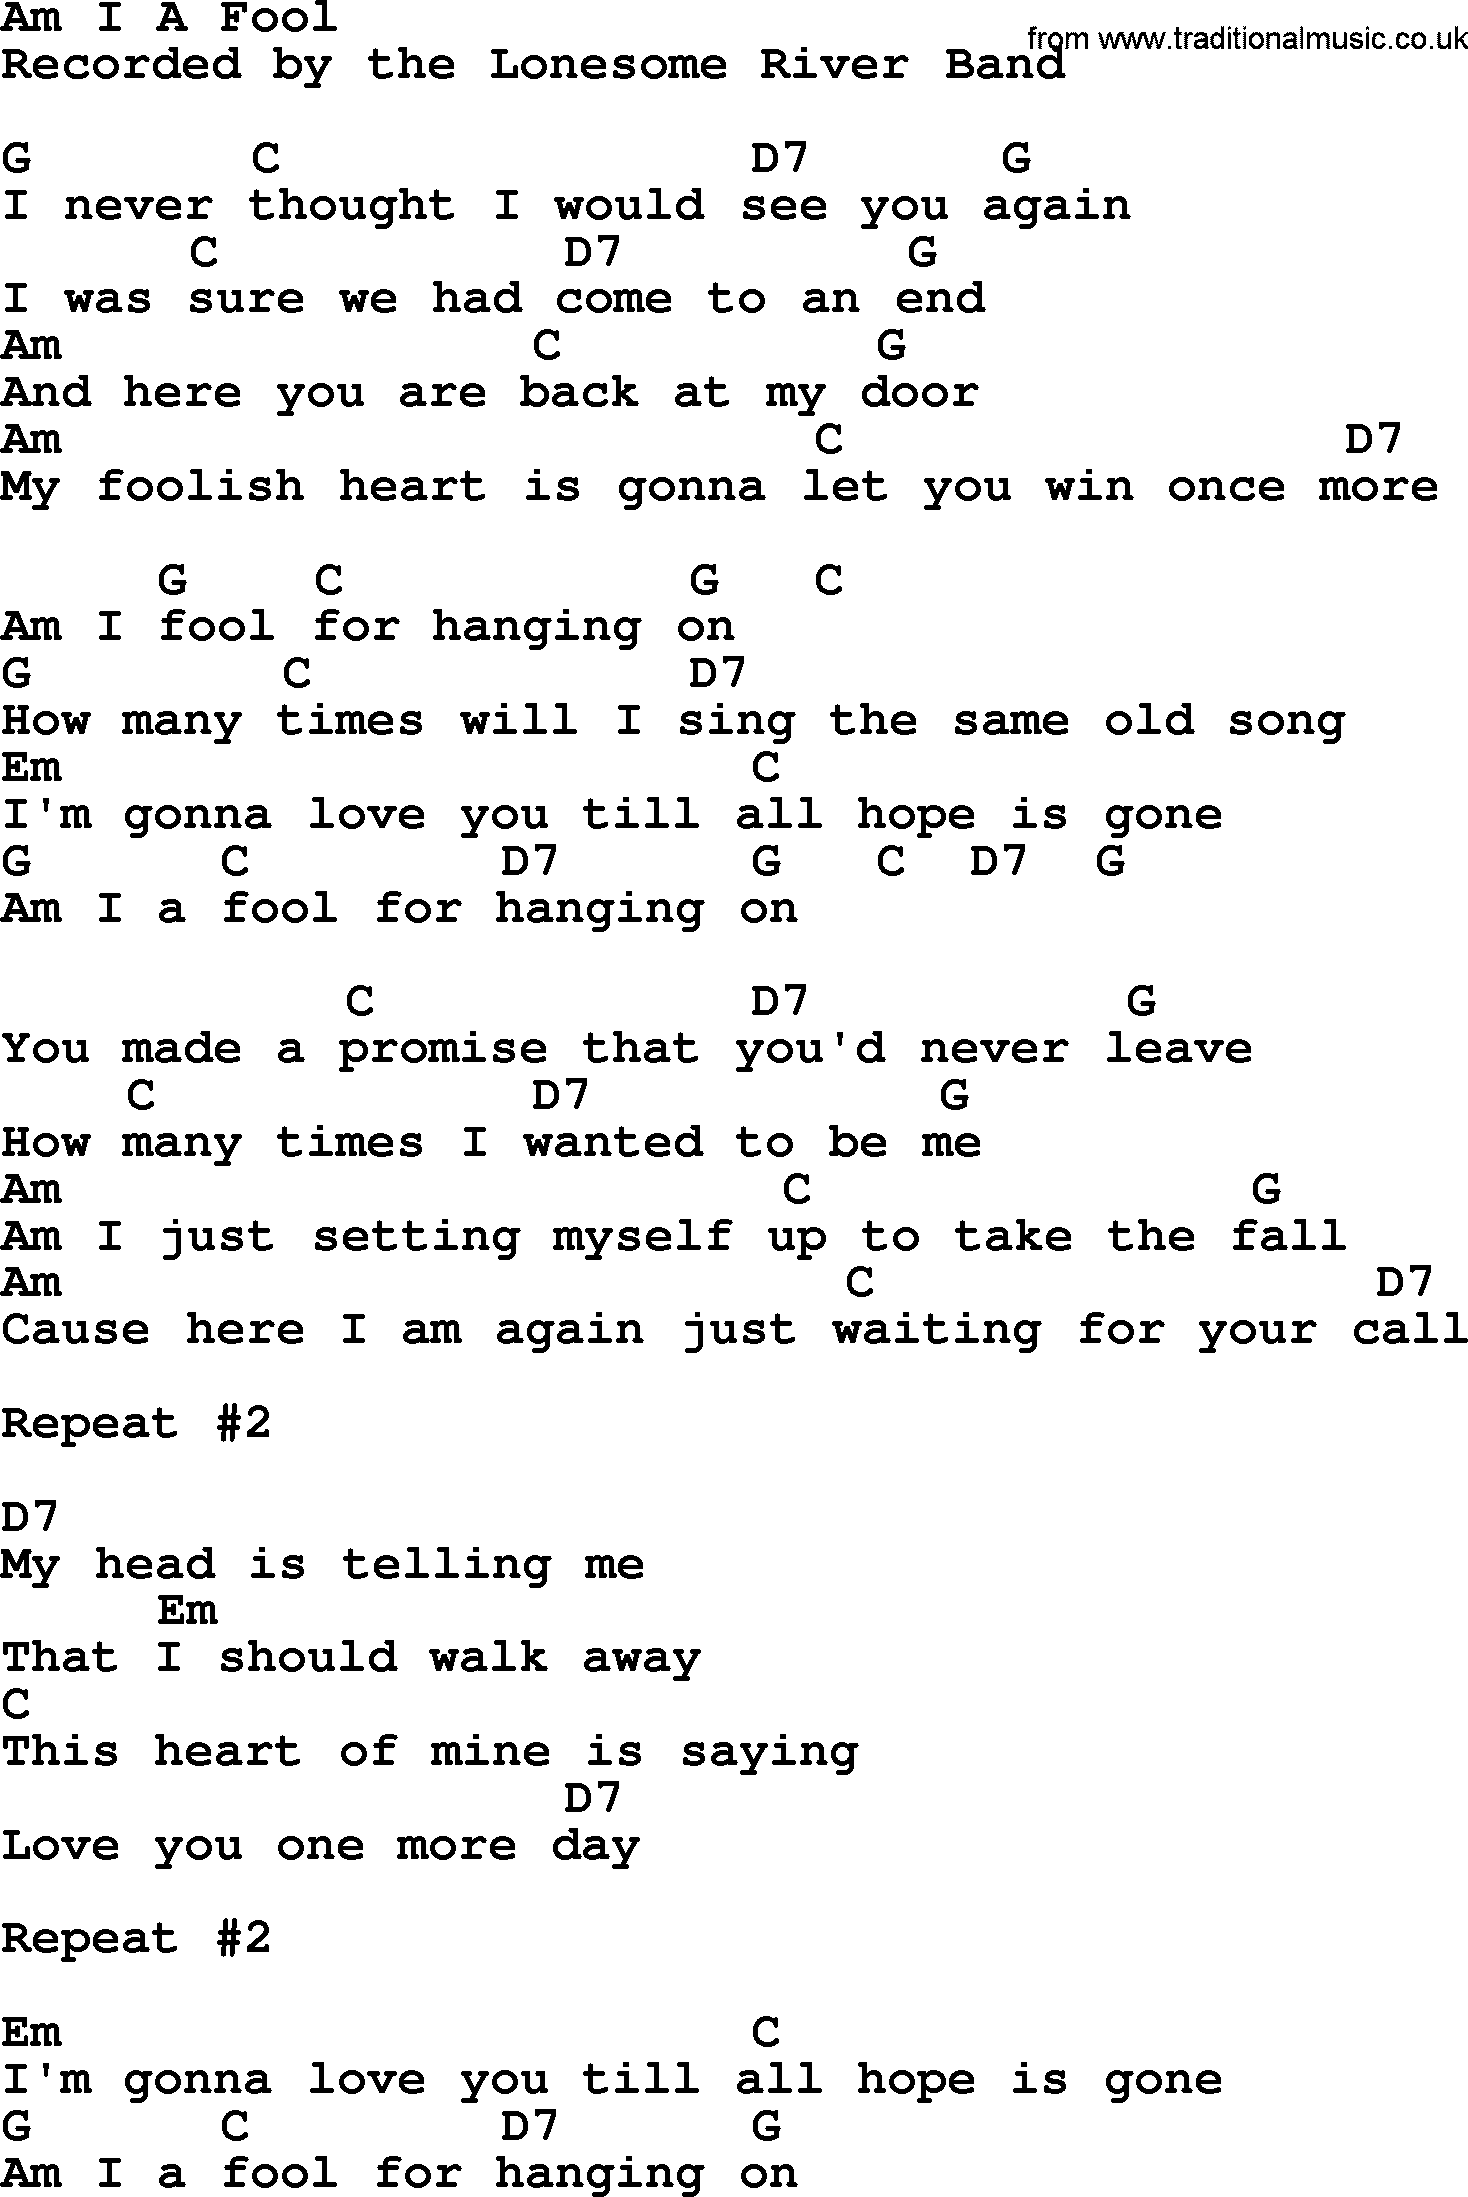 Bluegrass song: Am I A Fool, lyrics and chords